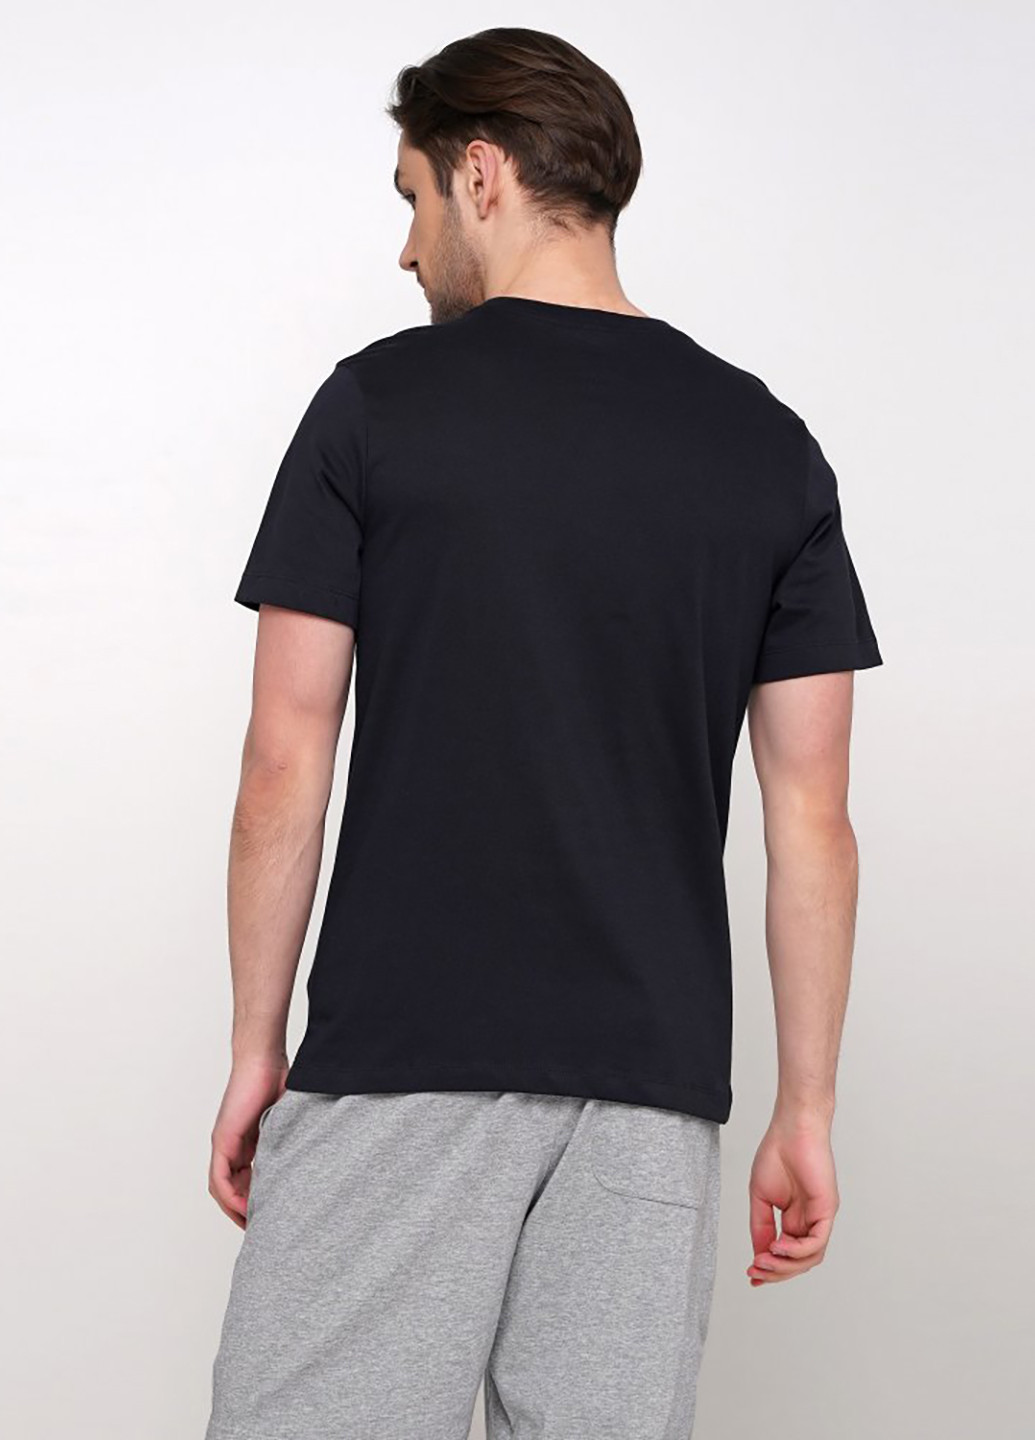 Черная футболка Nike M Nk Dry Tee Dfc Crew Solid